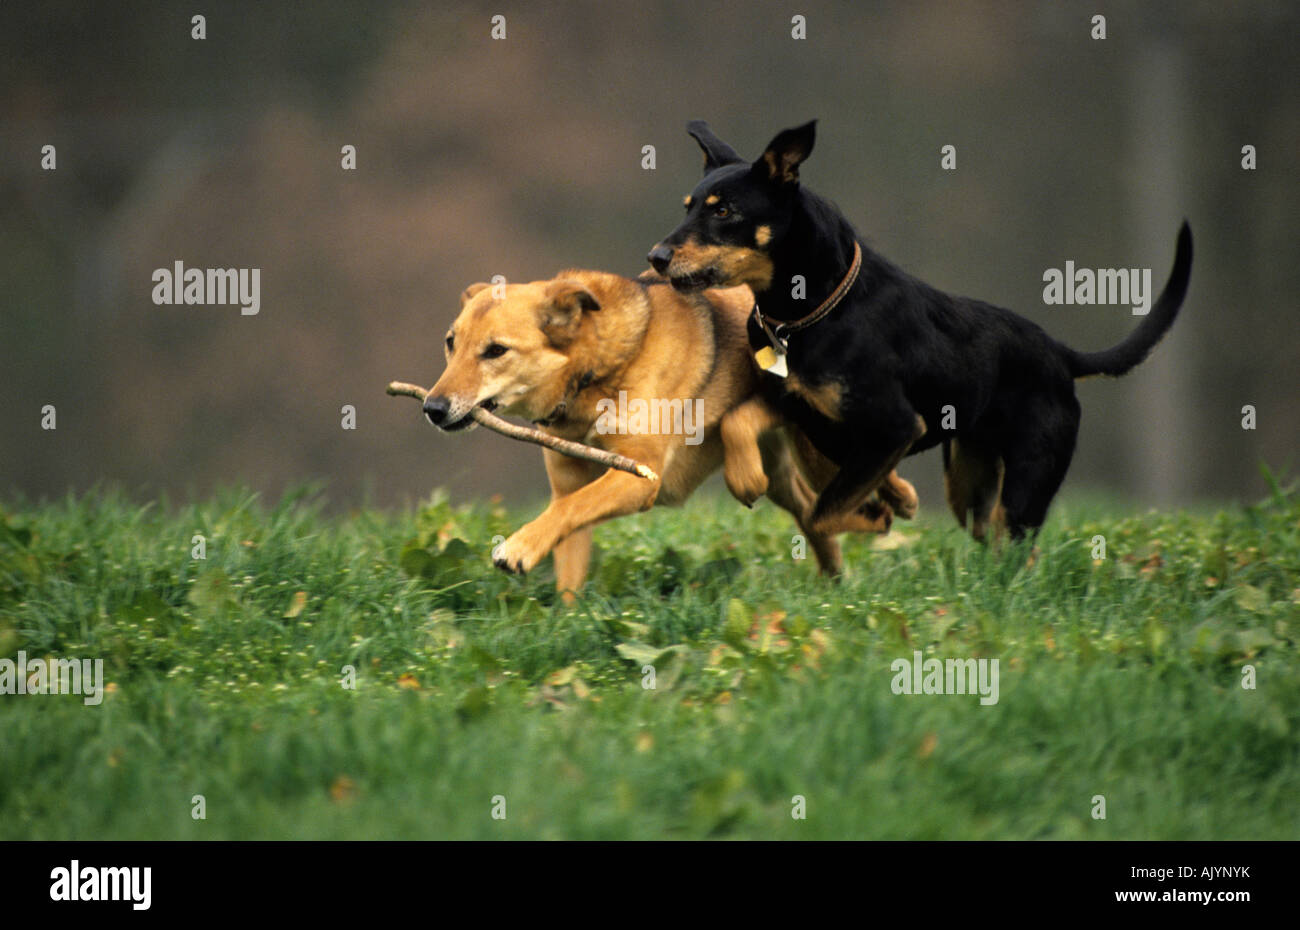 Schäferhundmischlinge spielend | shepherd dog crossbreeds playing Stock Photo